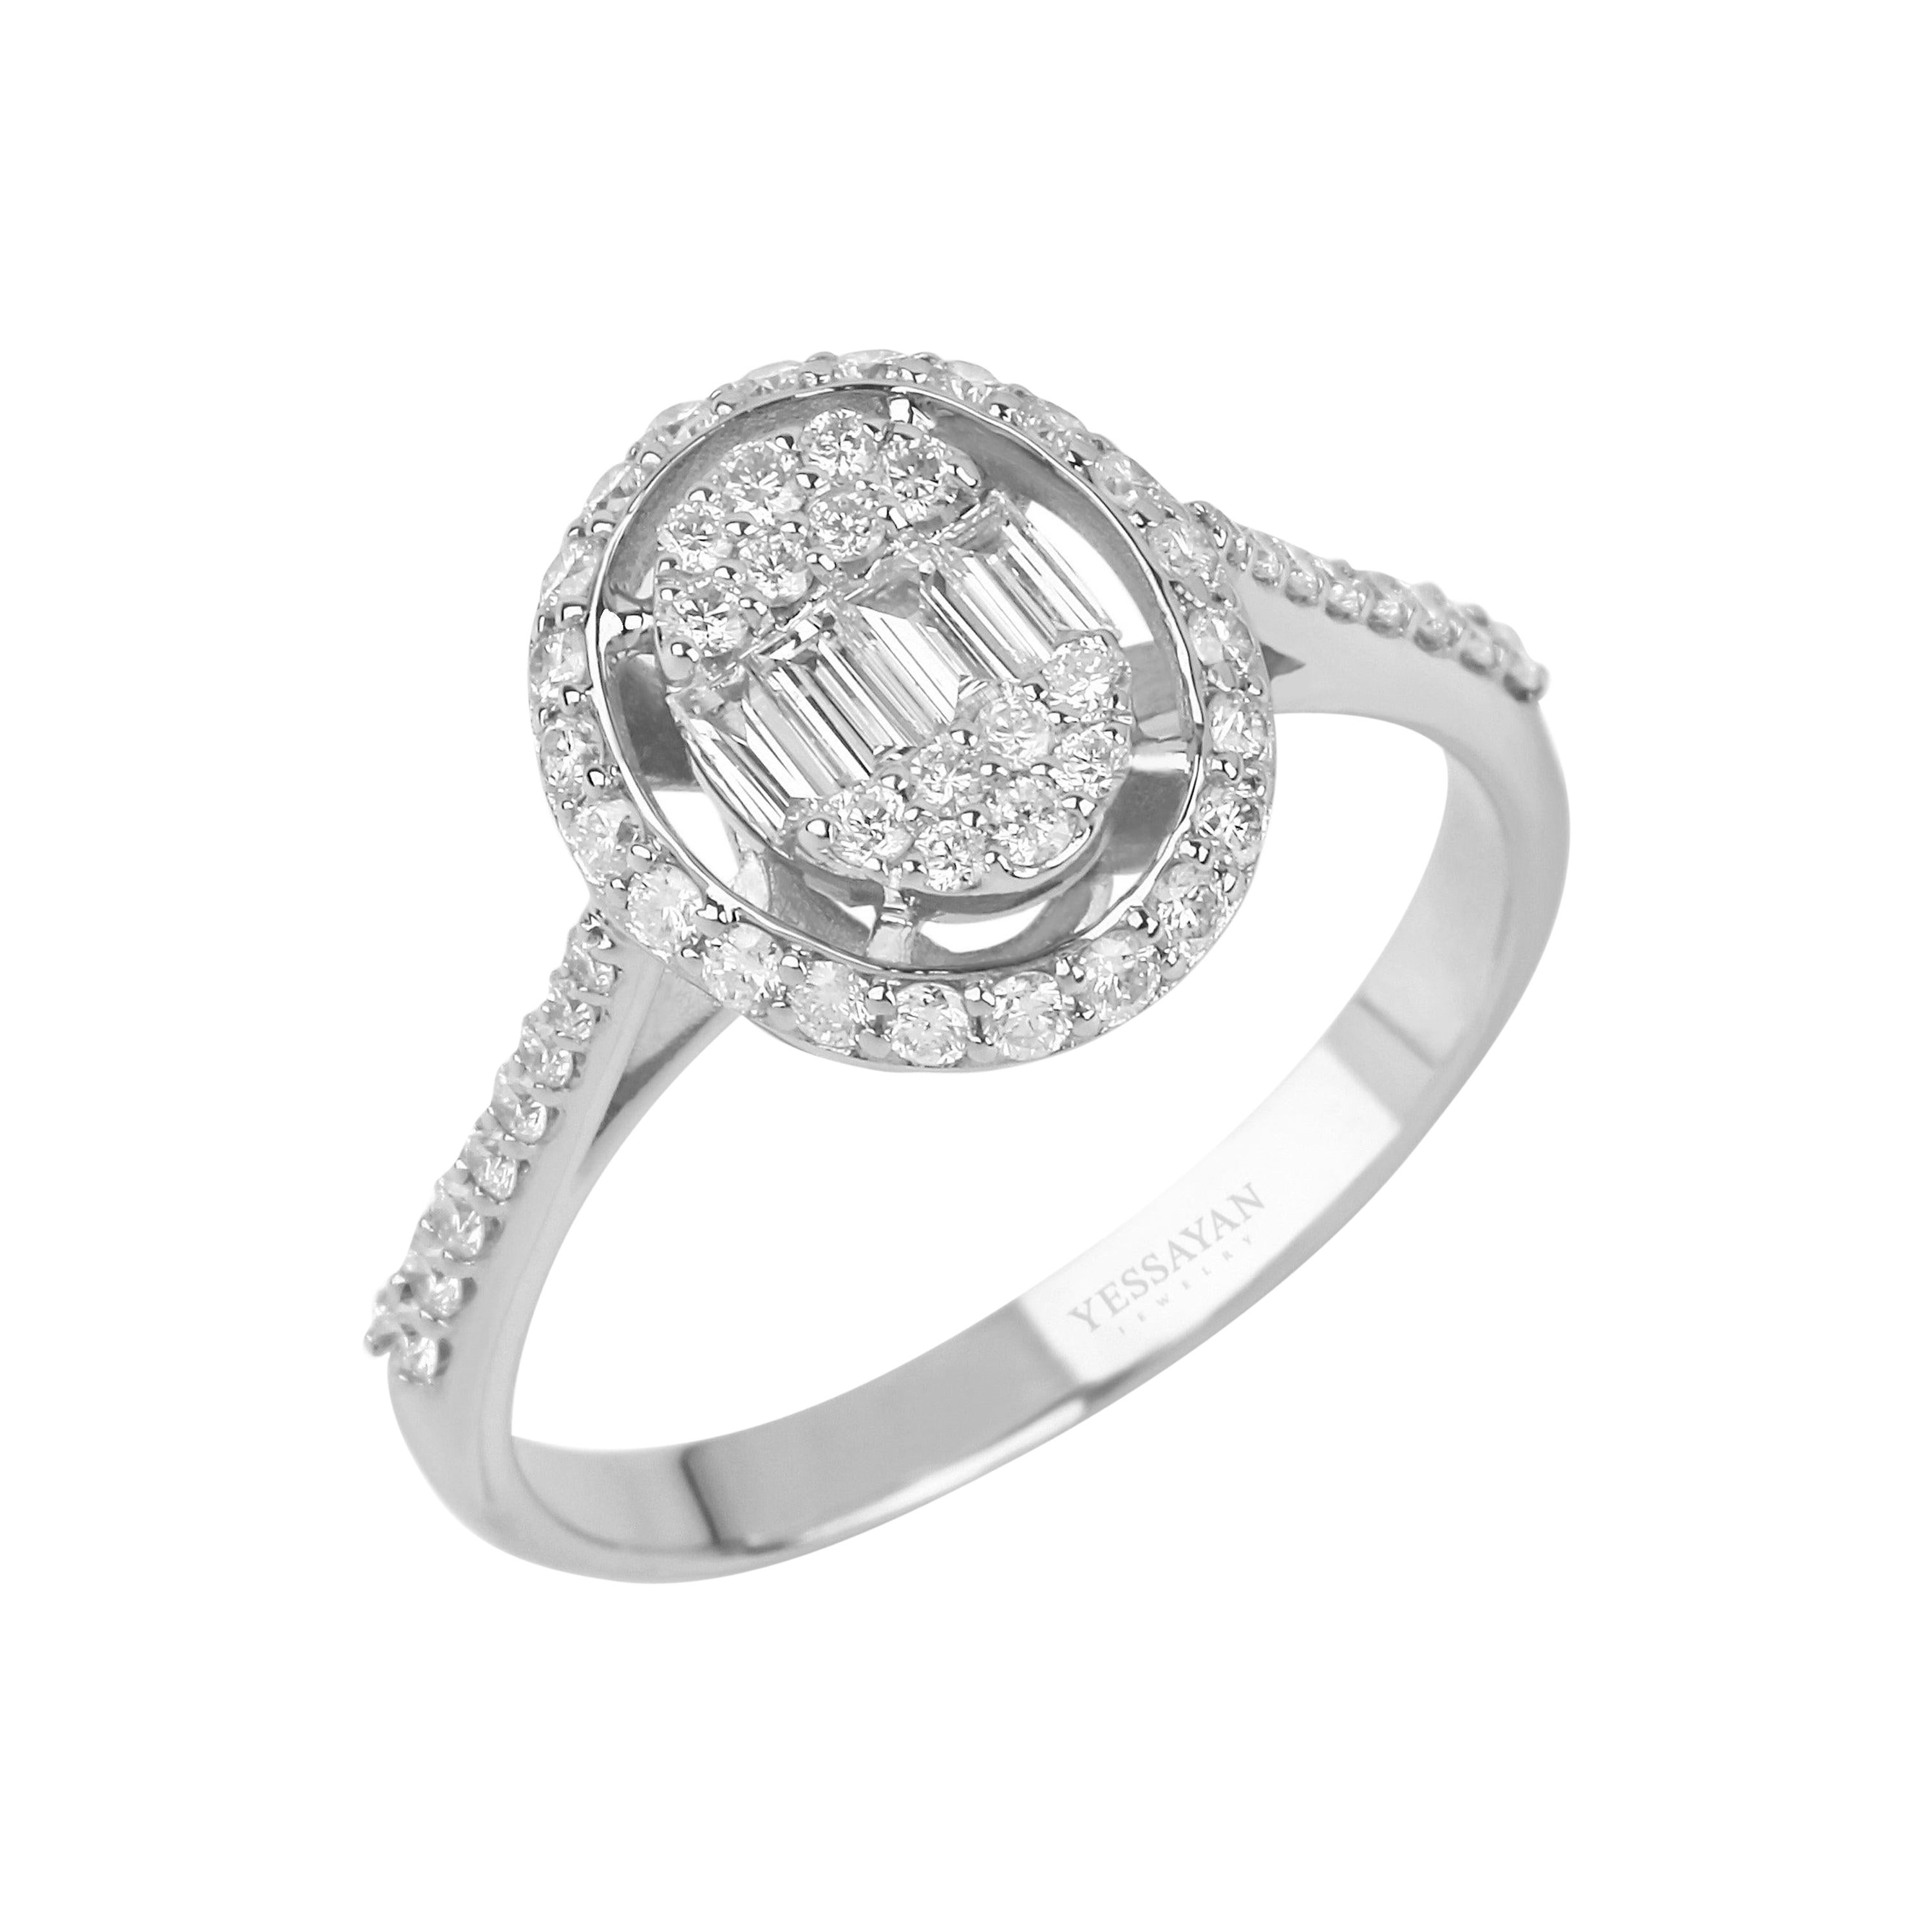 Illusion Baguette Diamond Ring in 18K White Gold